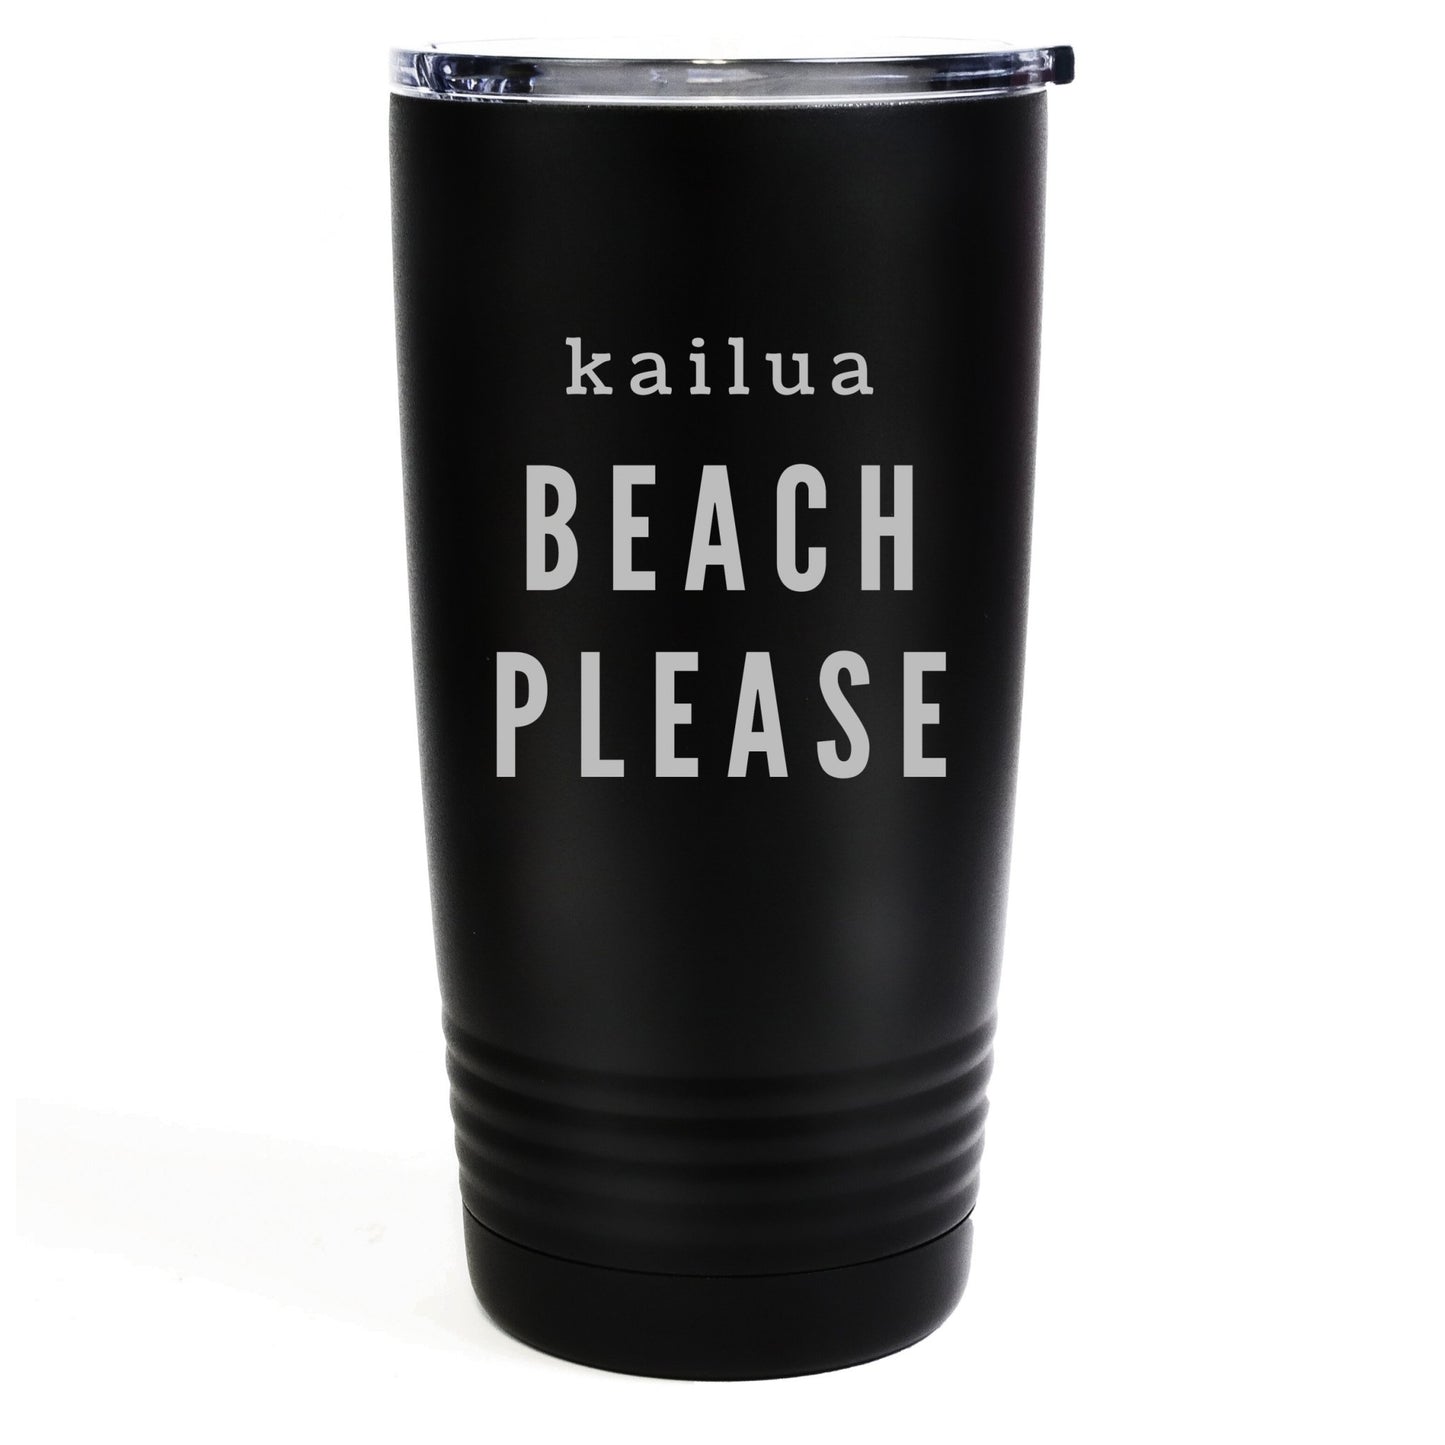 Kailua Beach Please 20oz Etched Tumbler Global Village Kailua Boutique